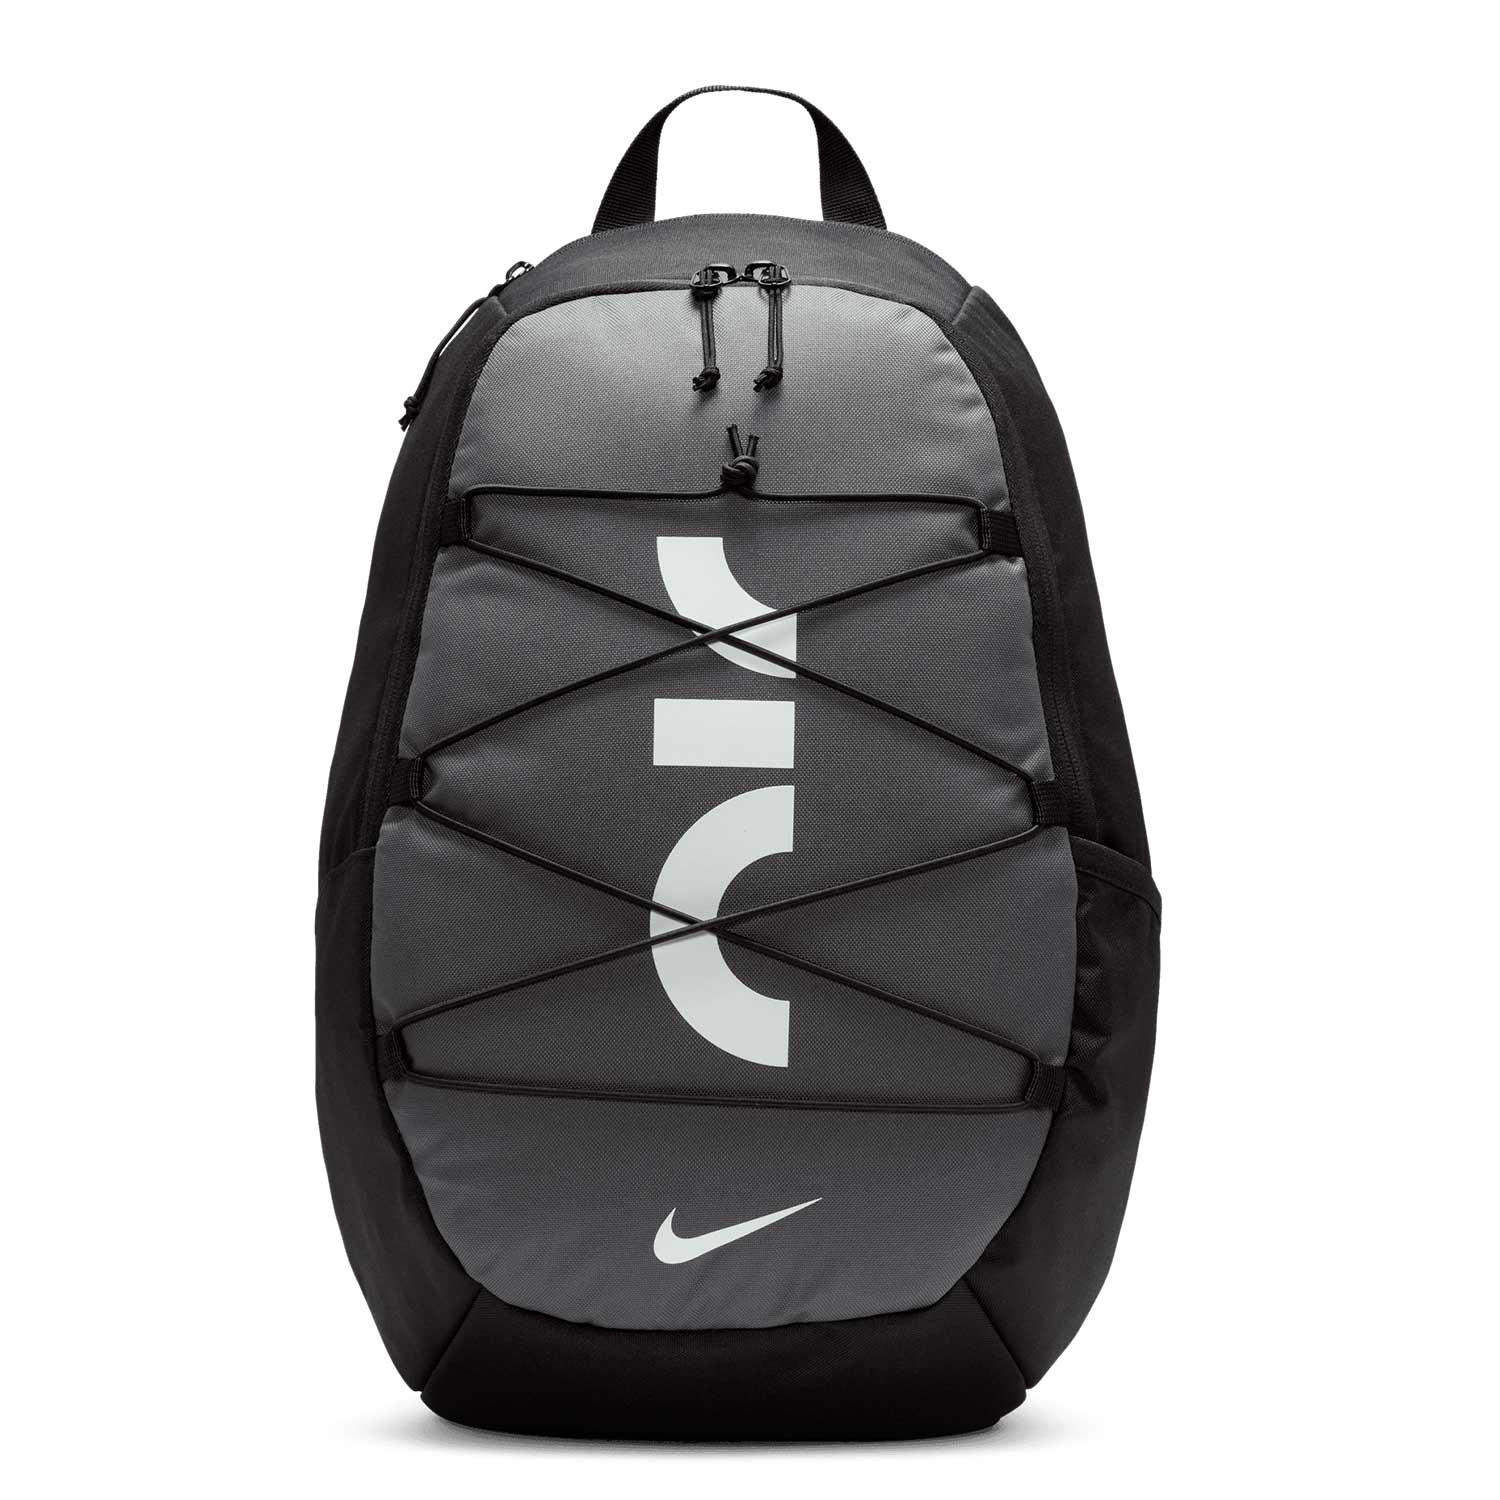 Bolsas y mochilas Nike  Liverpool FC Mochila de fútbol Negro